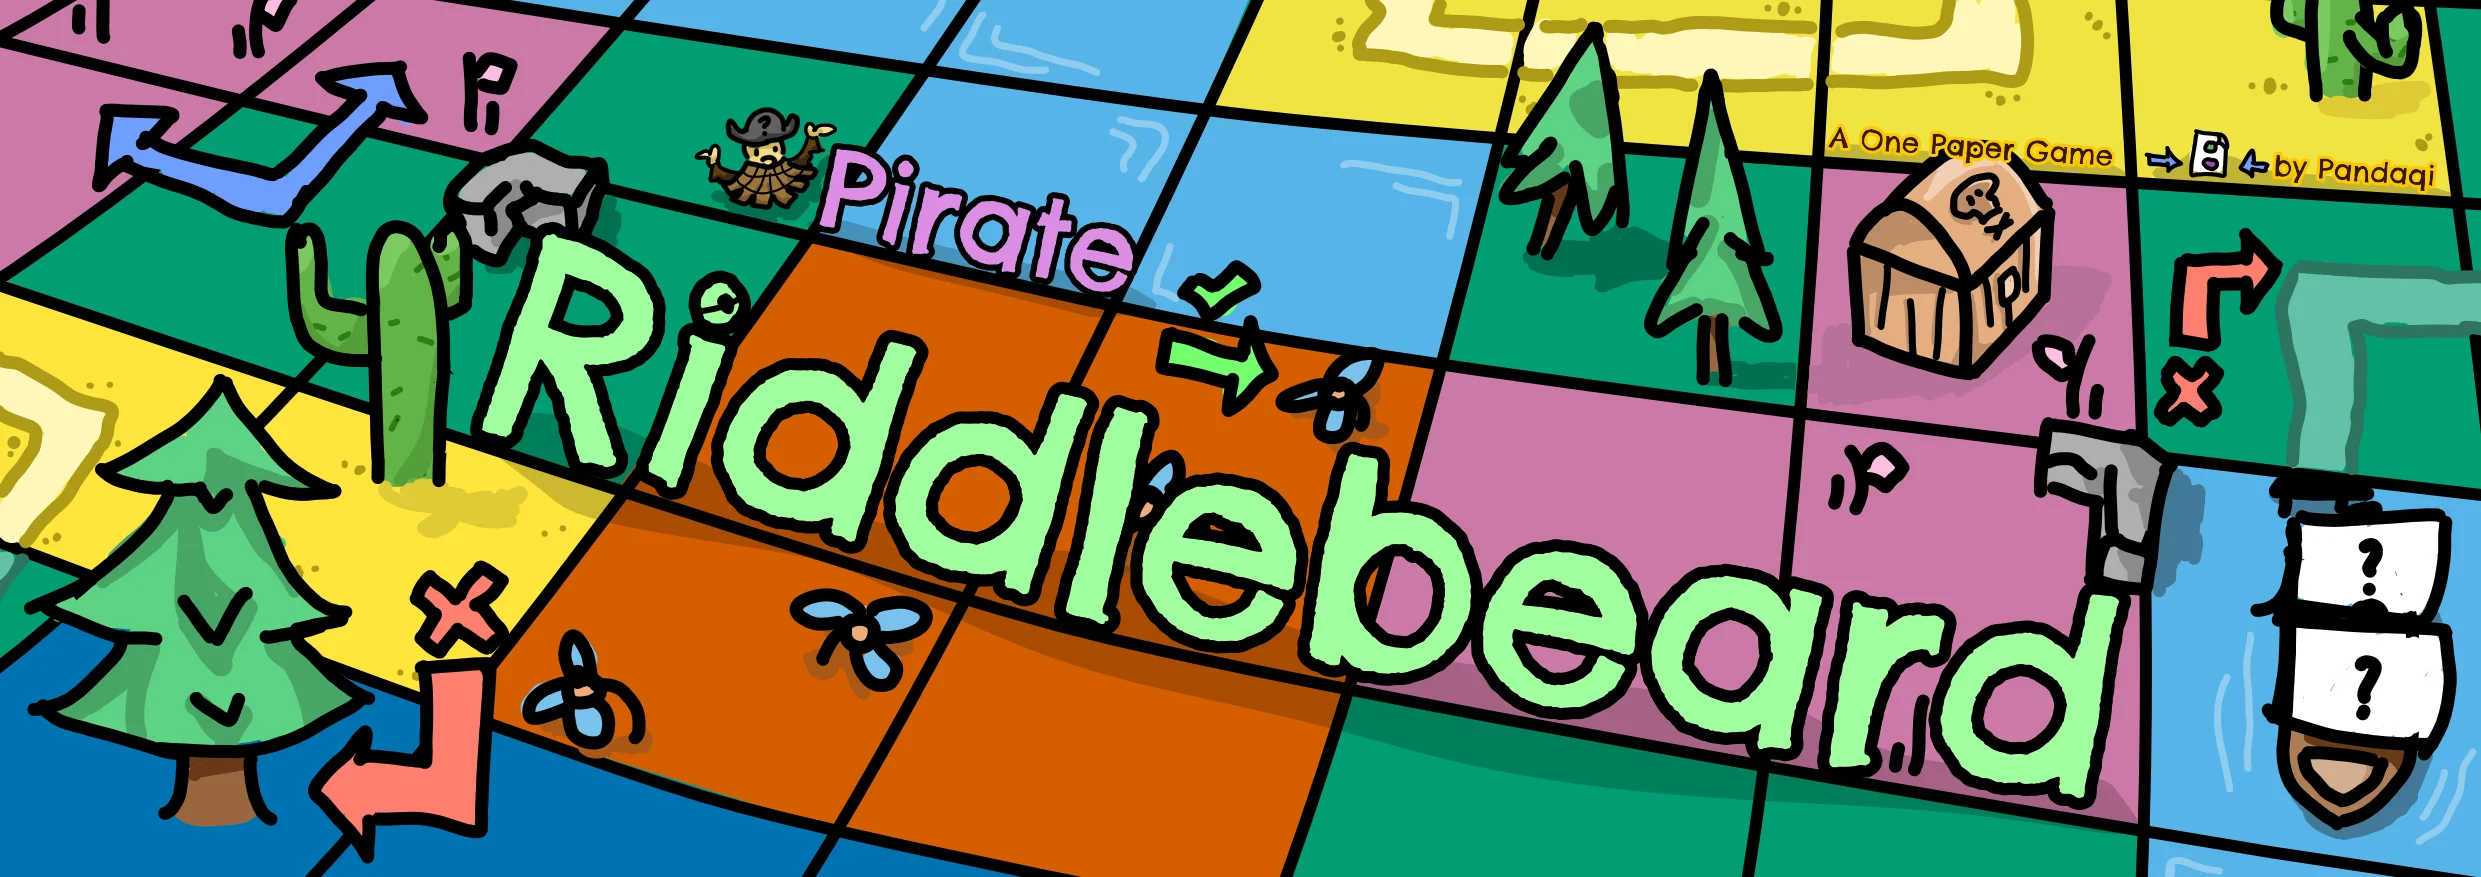 Thumbnail / Header for article: Pirate Riddlebeard